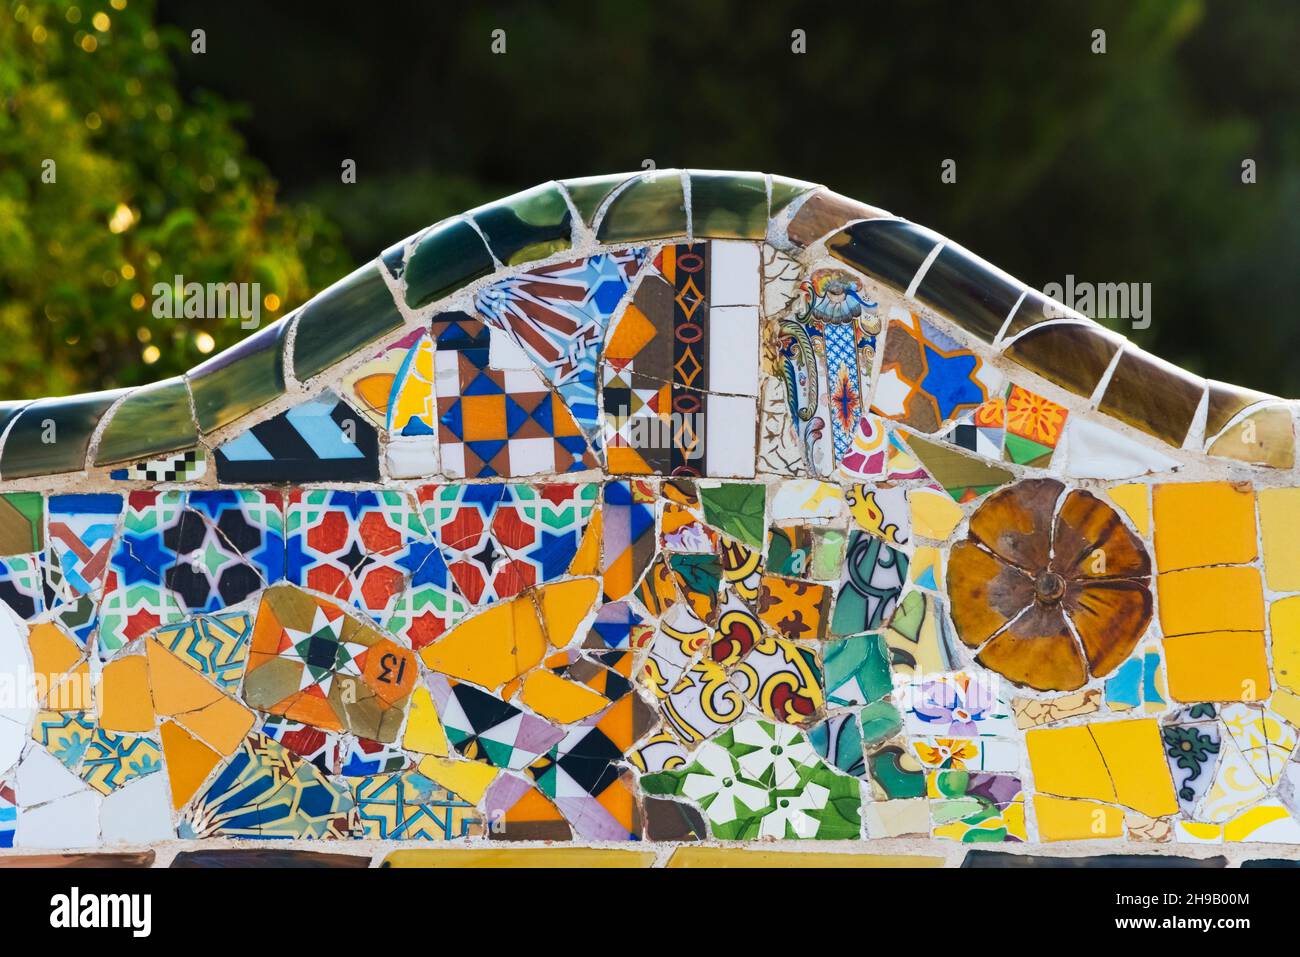 Park Guell by Gaudi, mosaic work on the main terrace, Barcelona, Barcelona Province, Catalonia Autonomous Community, Spain Stock Photo